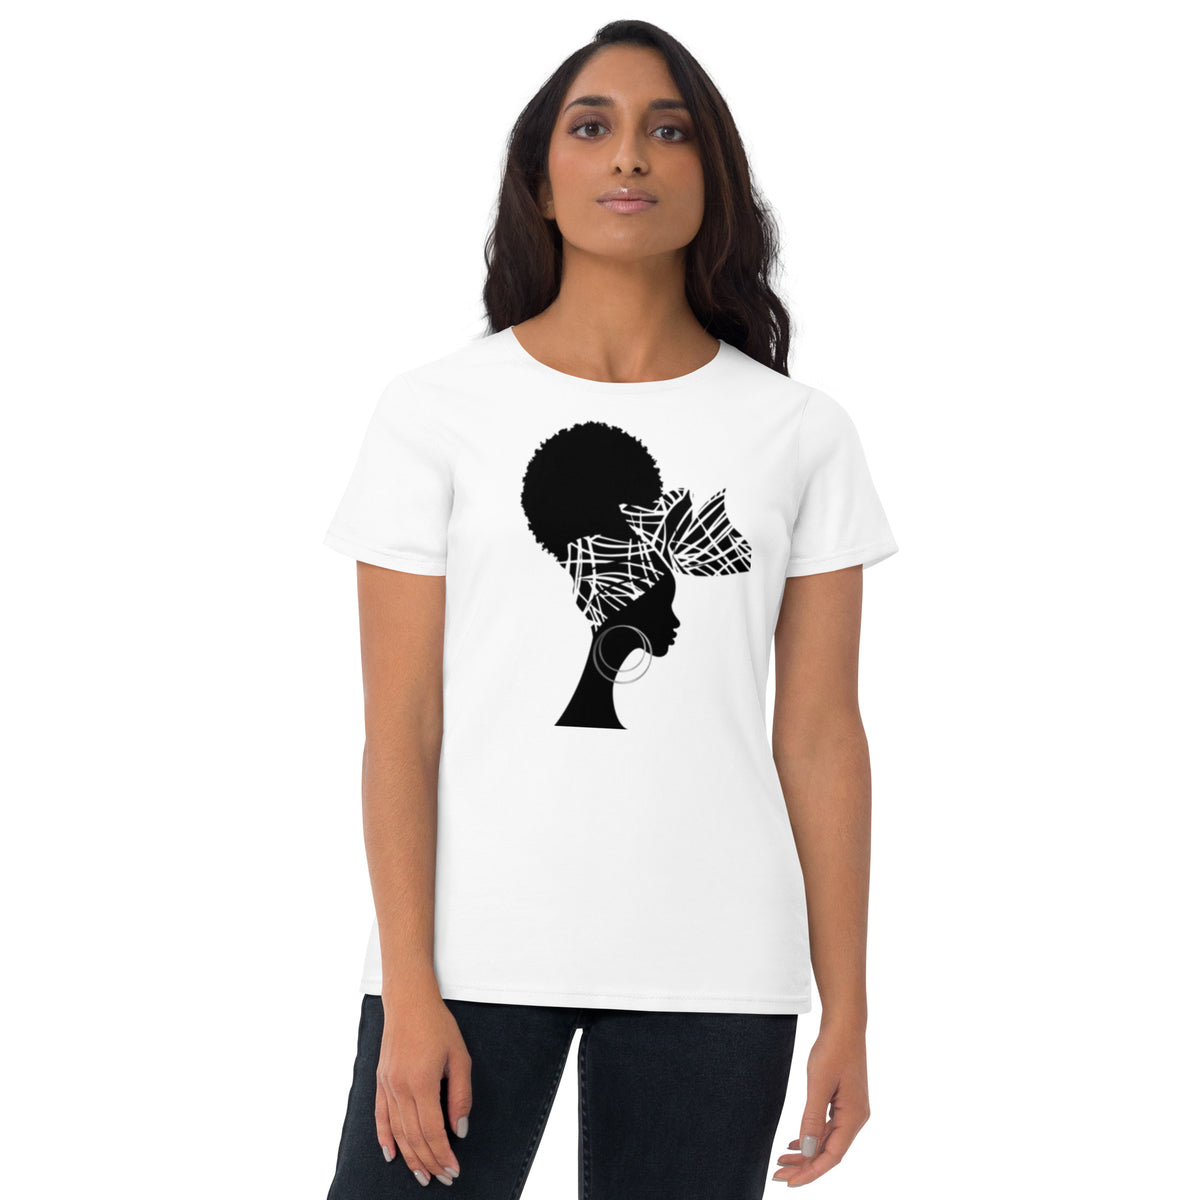 Black Women's Fashion Fit t-shirt Queen Nefertiti Edition Sumbu_African_Prints_and_Designs